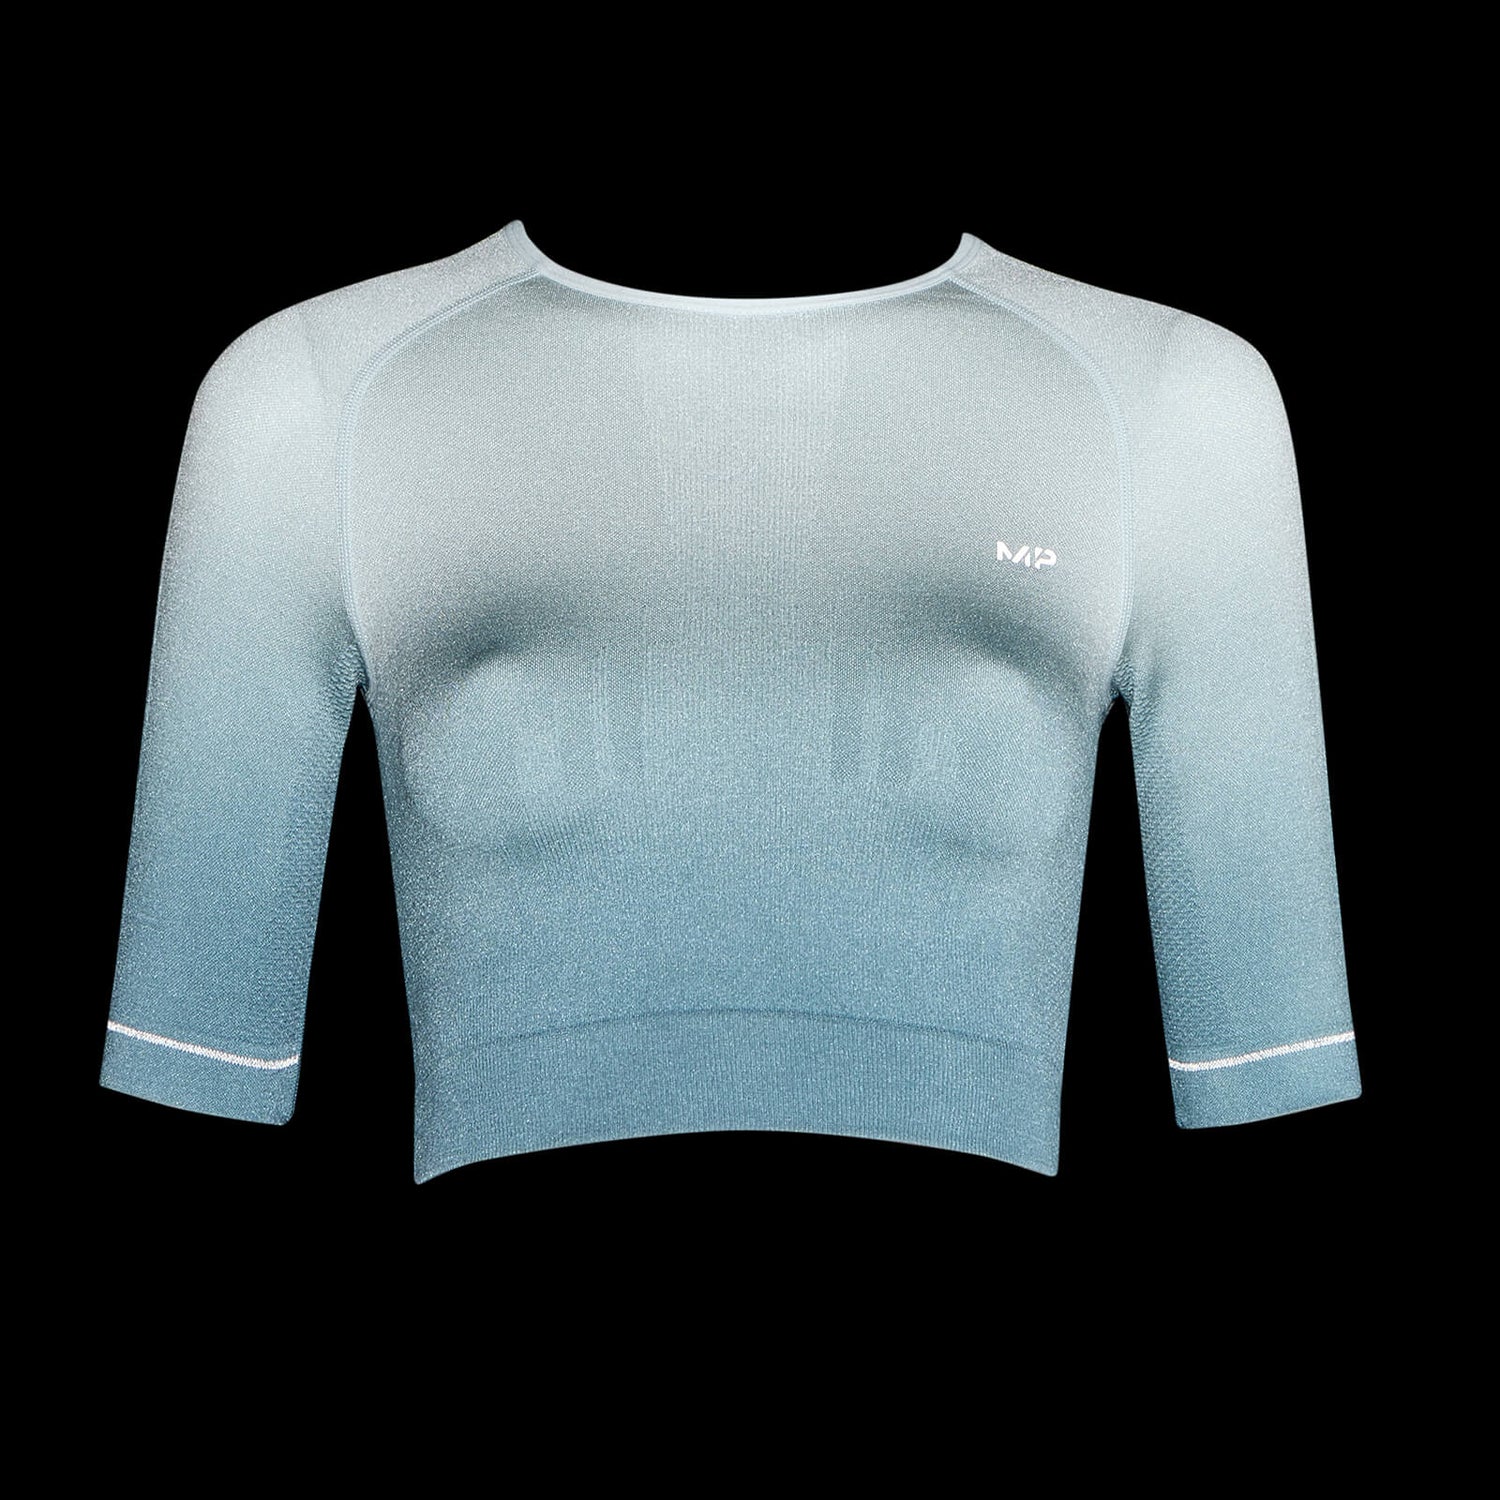 Camiseta sin costuras para mujer de MP - Azul marino - XS